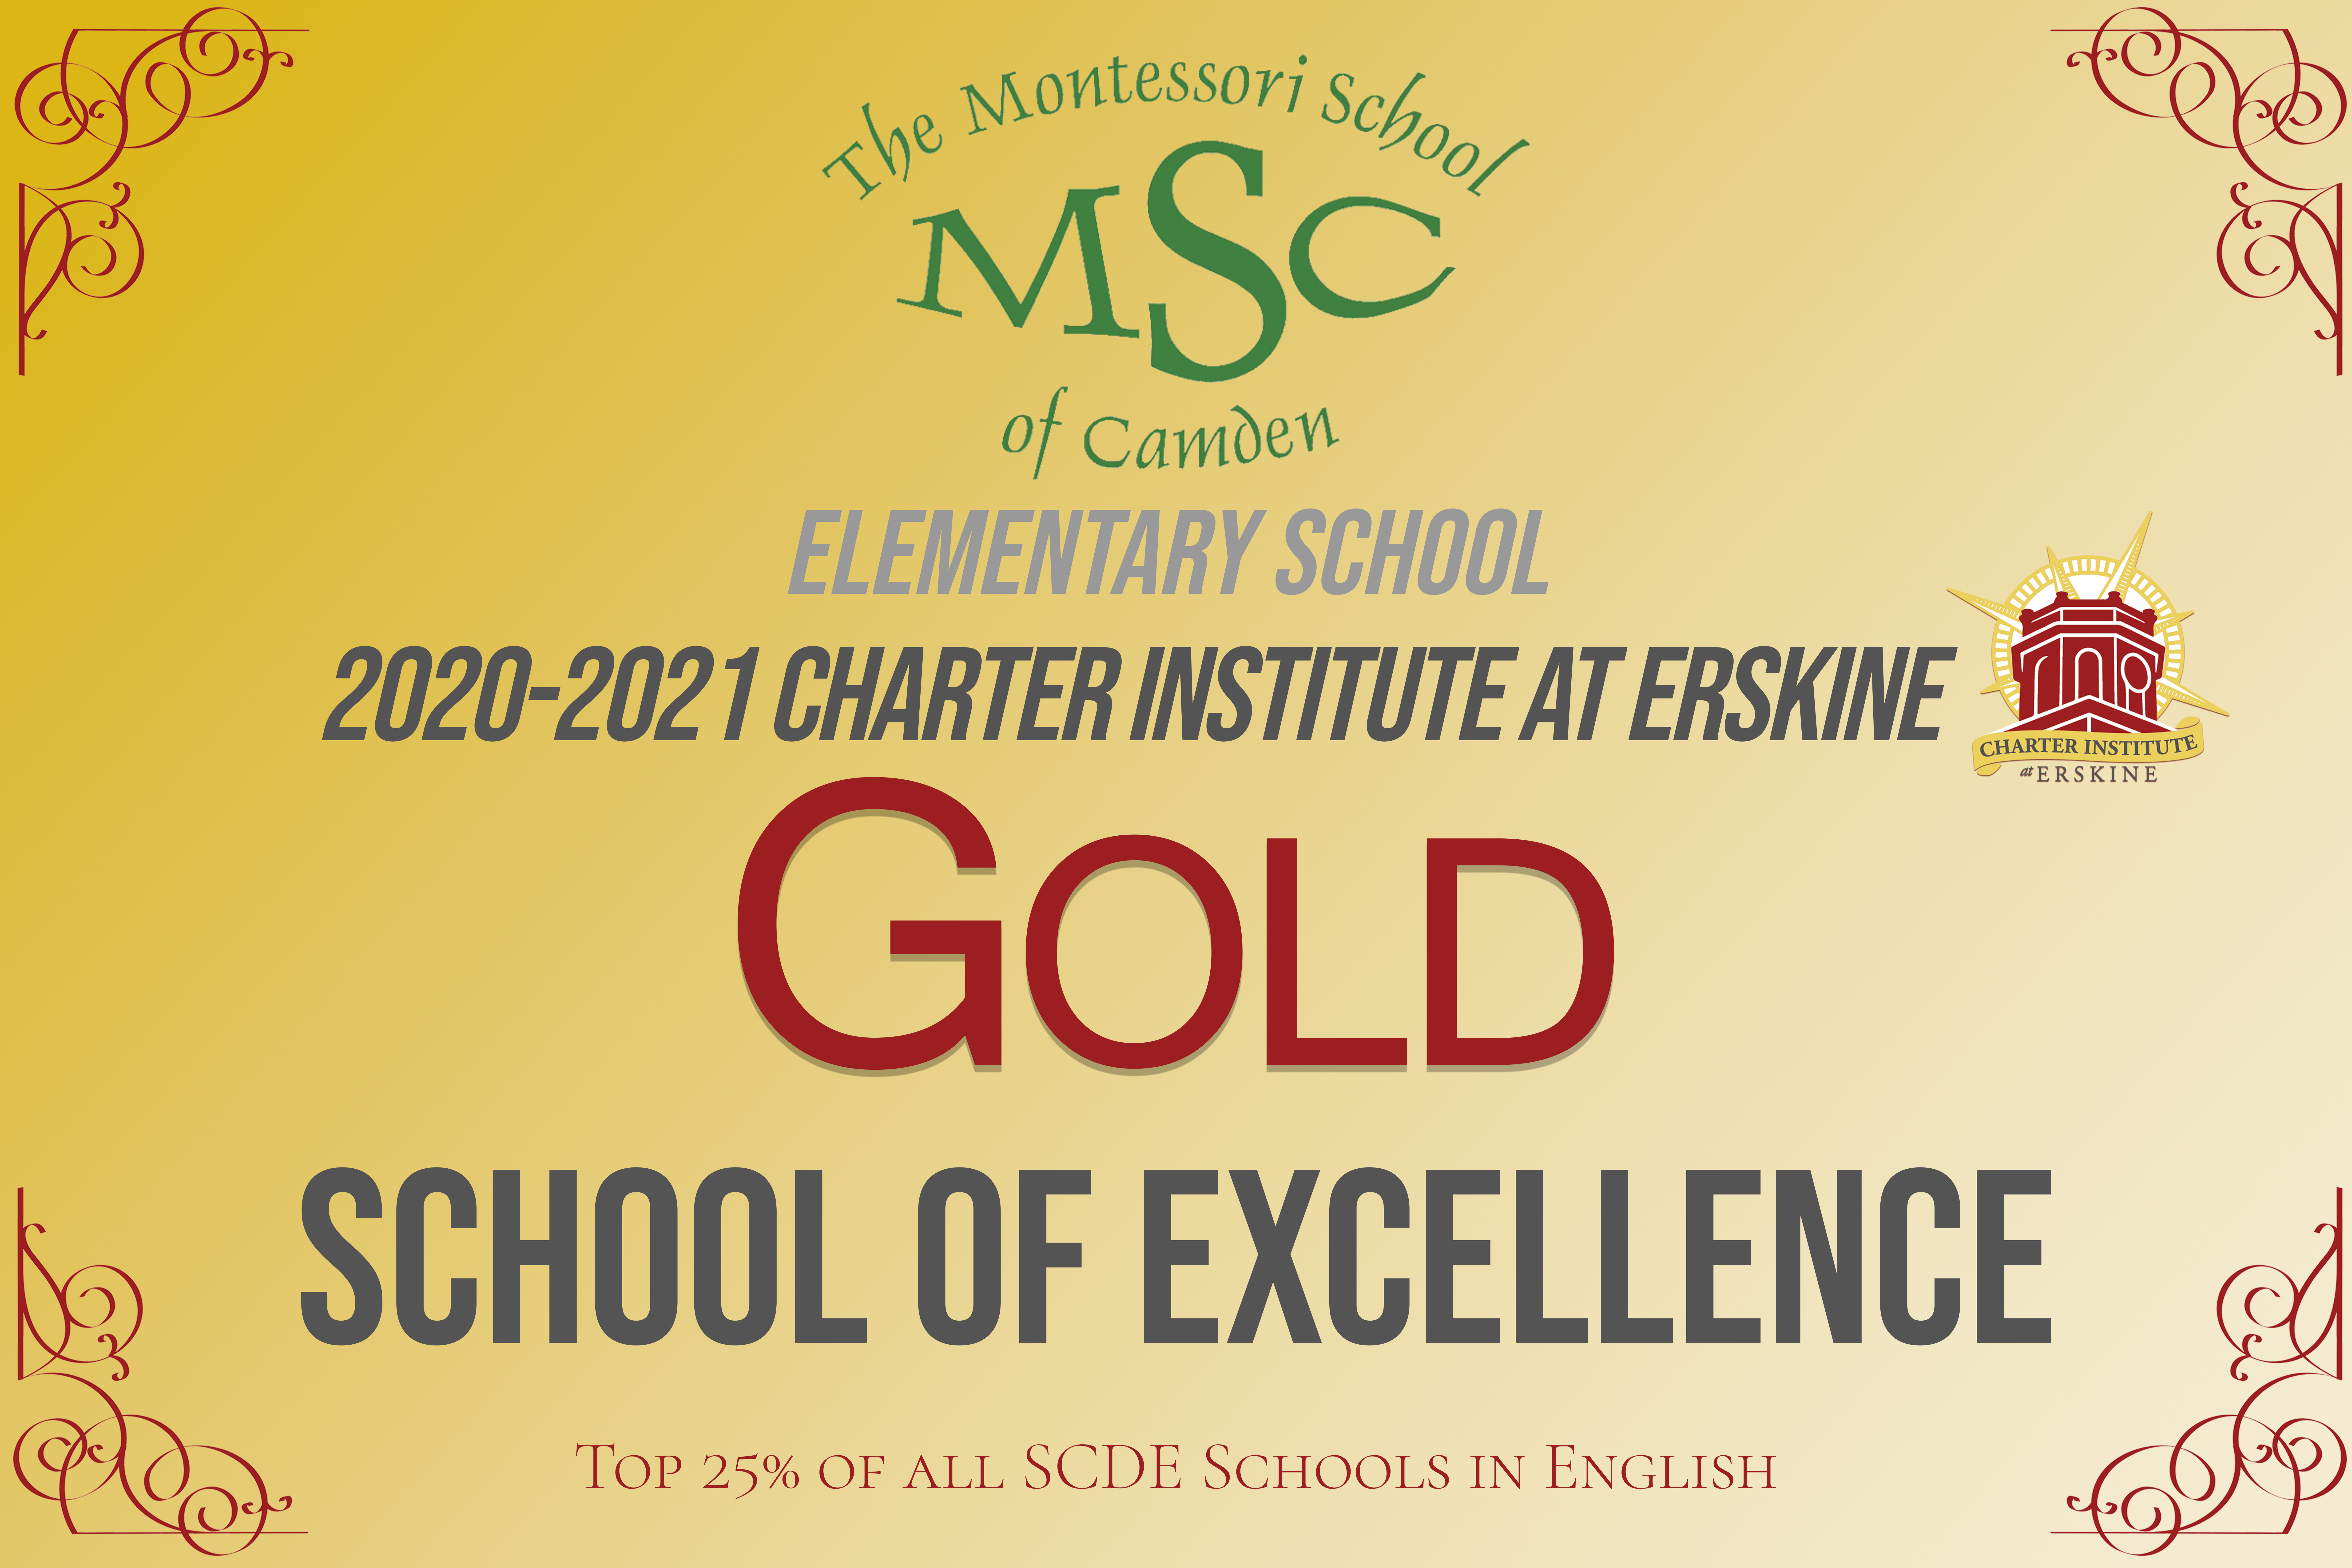 The Montessori School of Camden - Gold School of Excellence